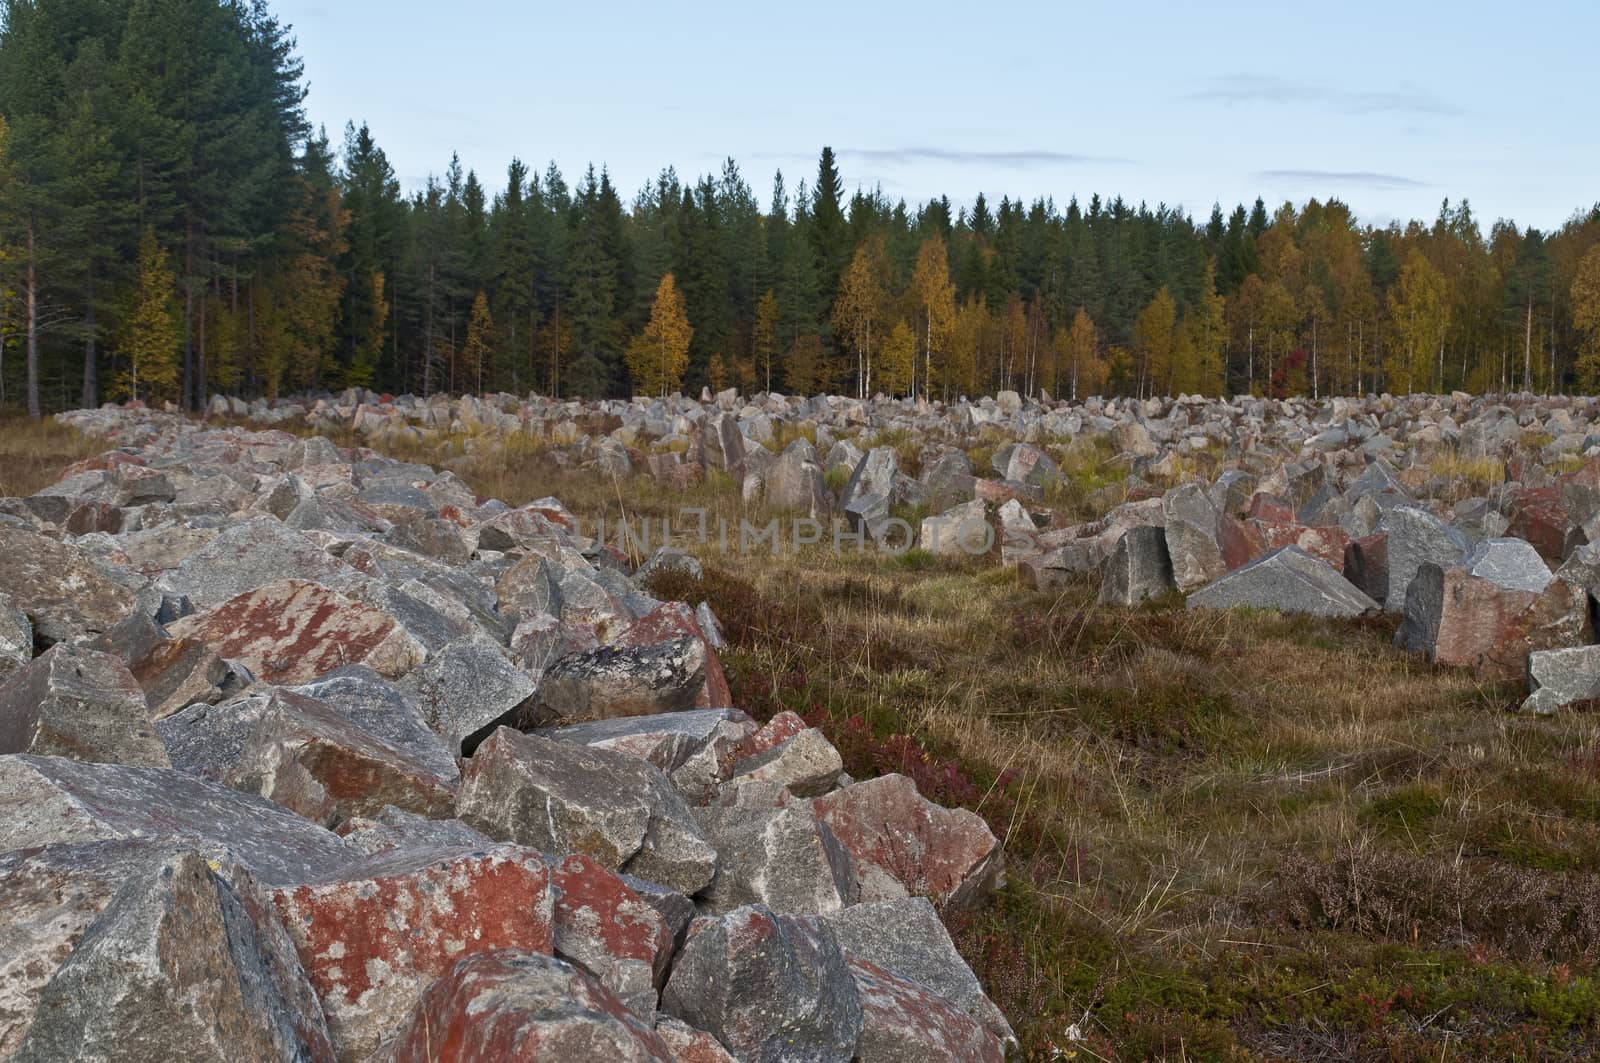 The Winter War Monument near Suomussalmi, Finland.